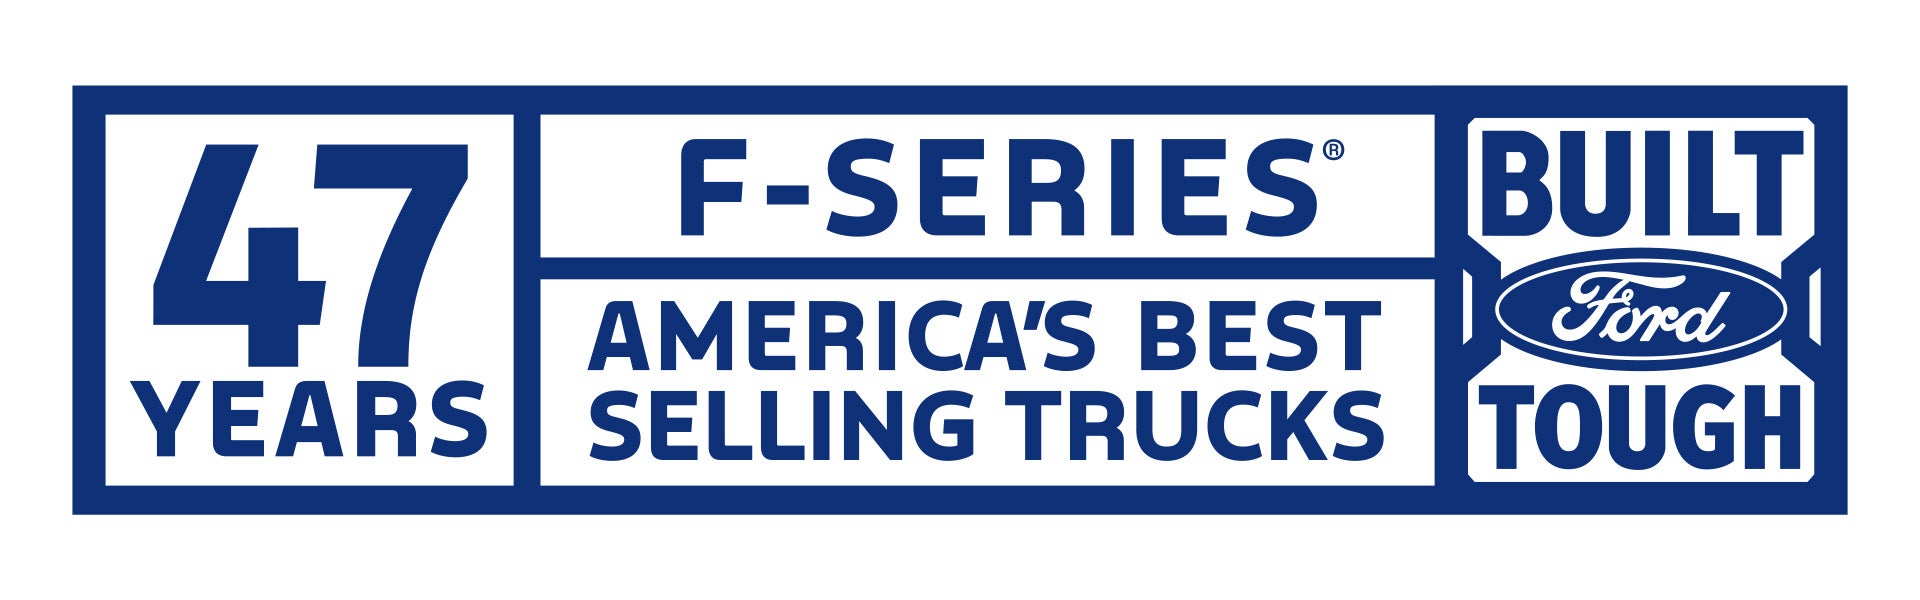 47 Years - America's Best Selling Truck